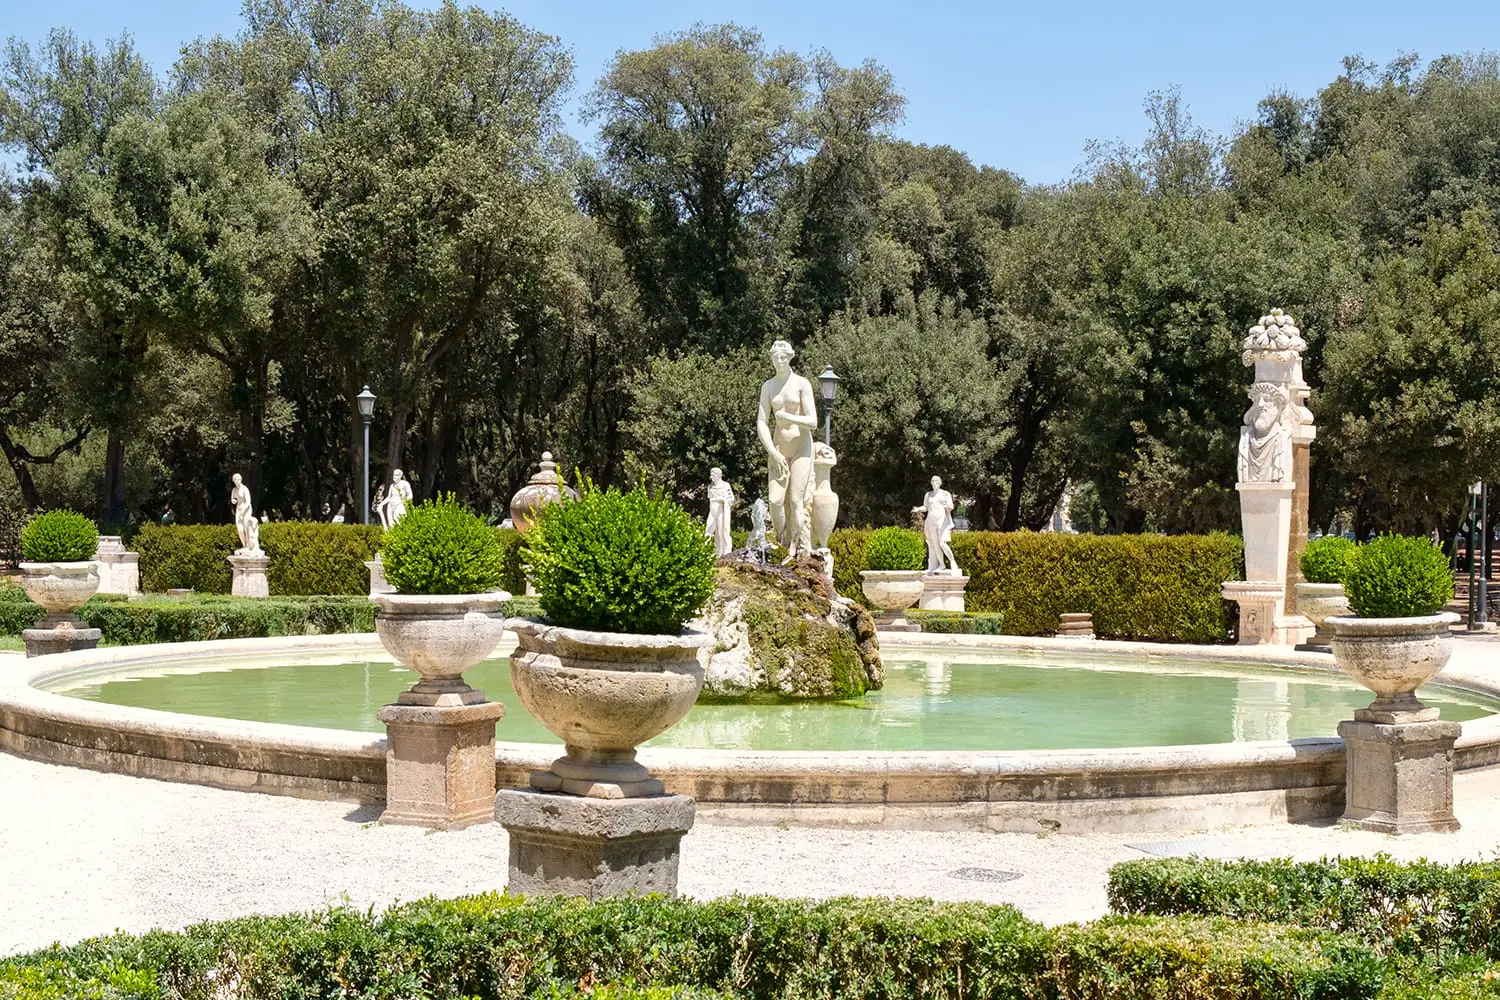 The gardens at Villa Borghese in Rome, Italy